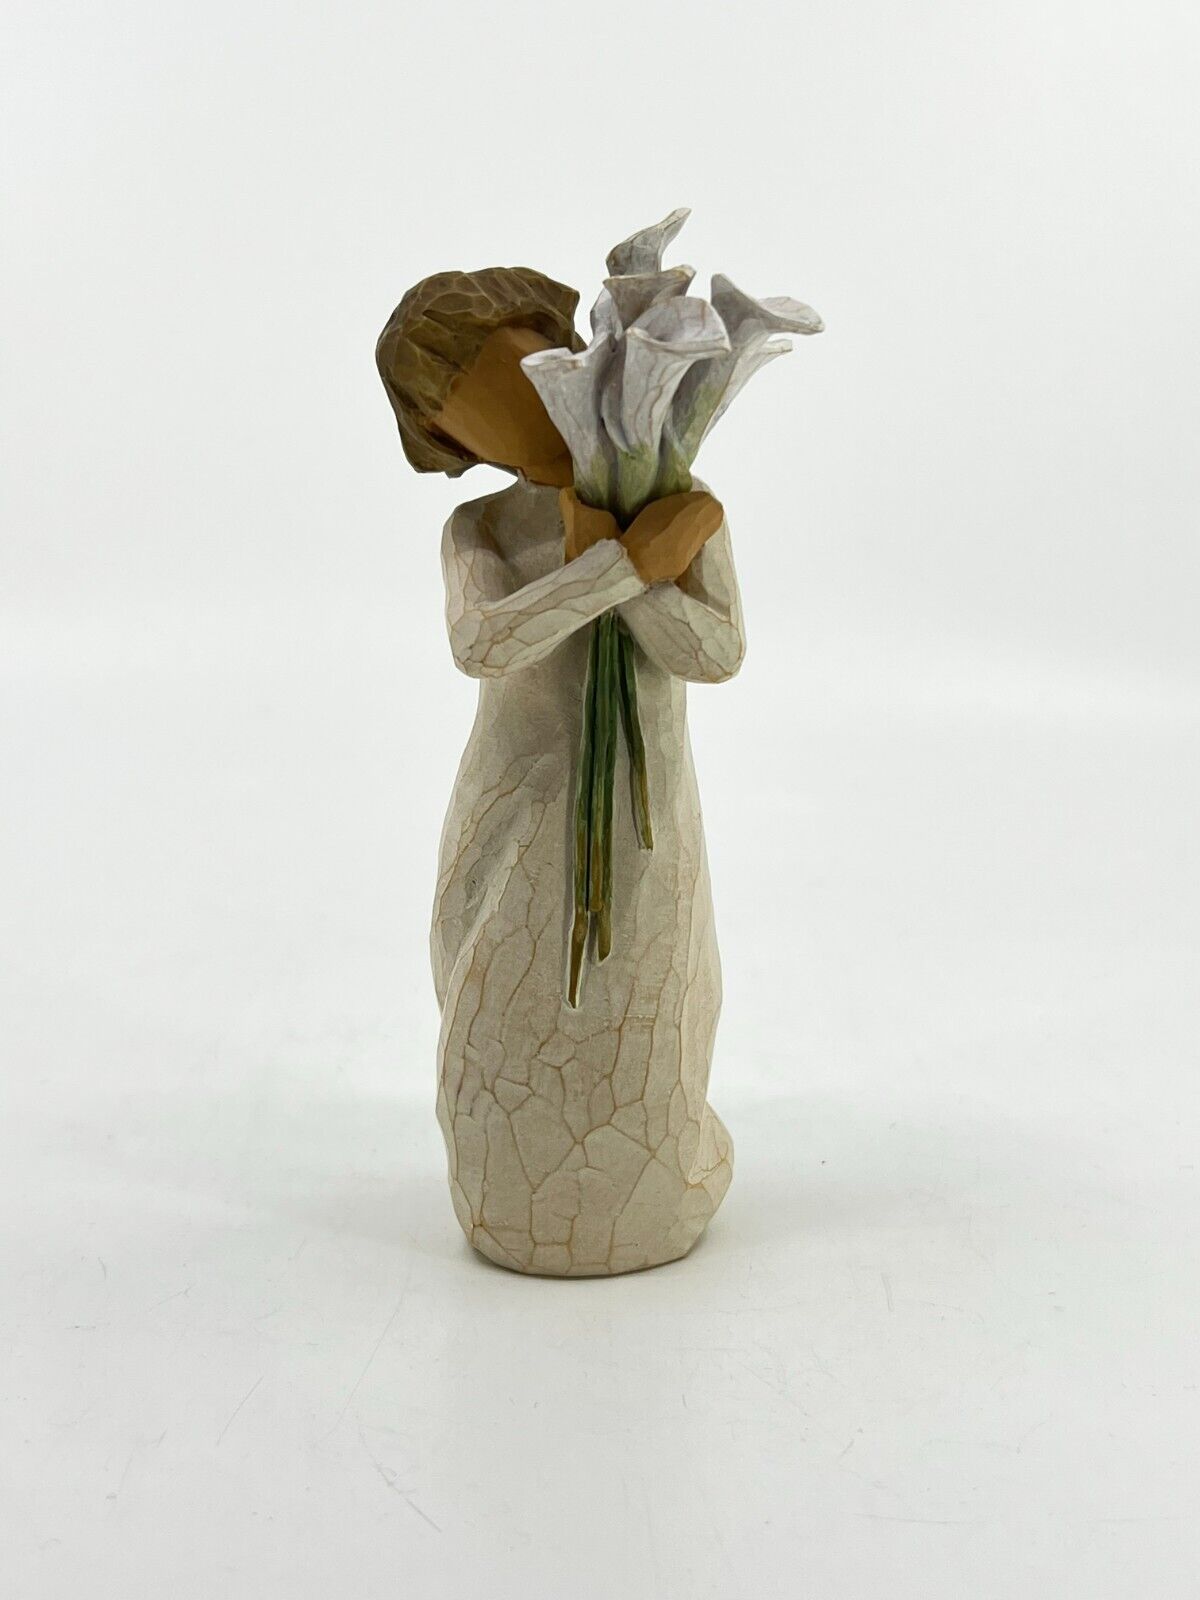 Willow Tree Beautiful Wishes Figurine by Susan Lordi - in original box Statue